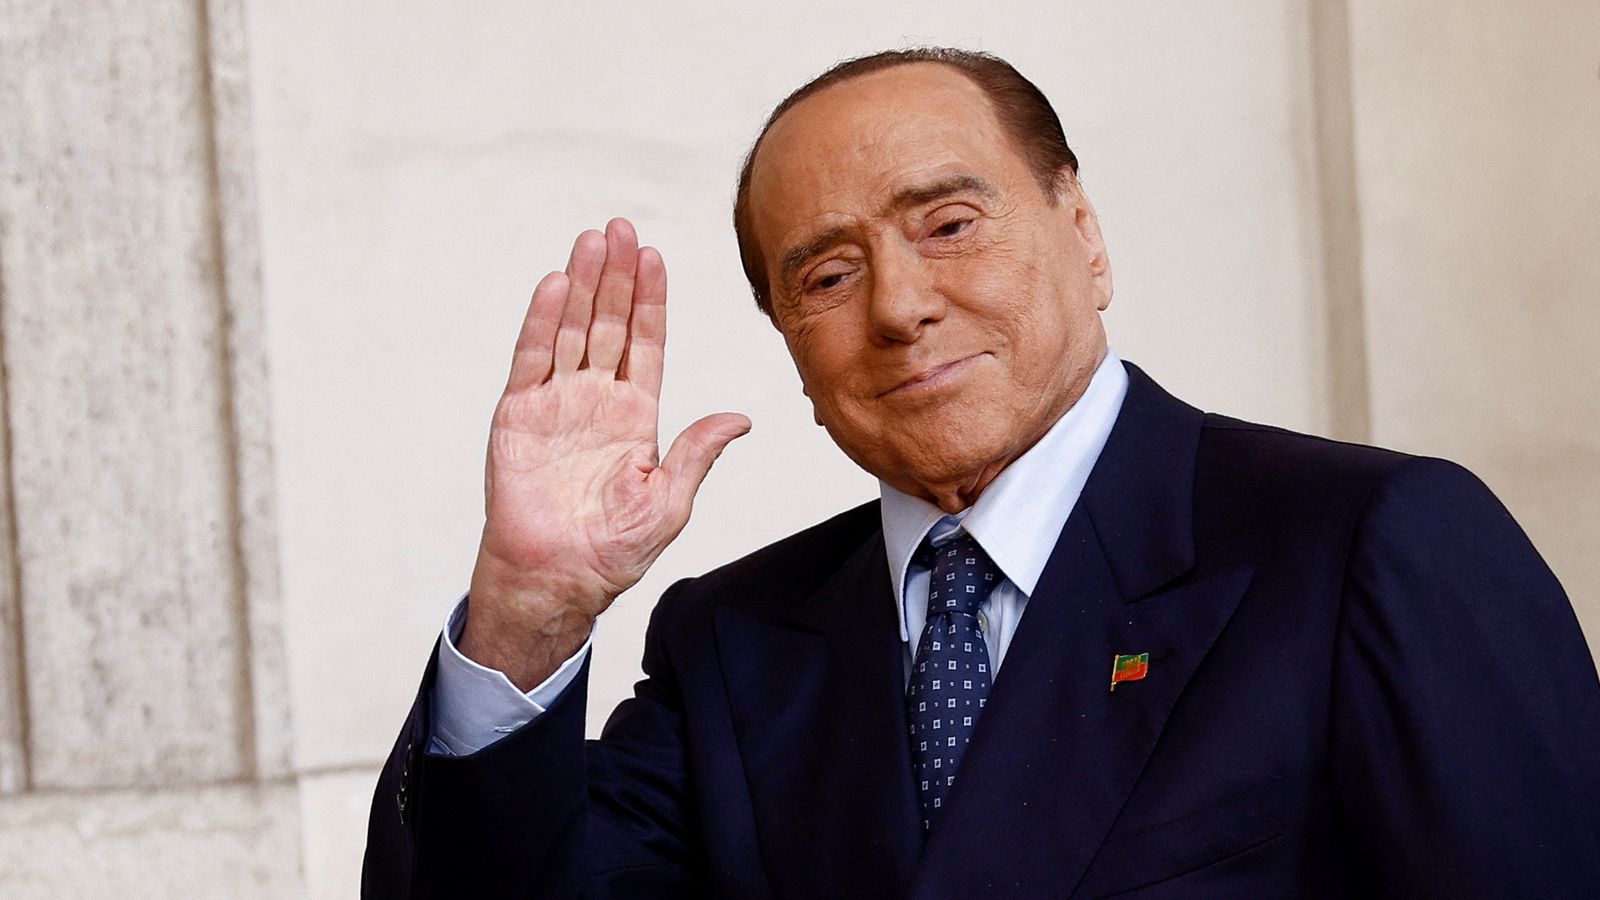 Silvio Berlusconi: Former Italian prime minister diagnosed with leukaemia